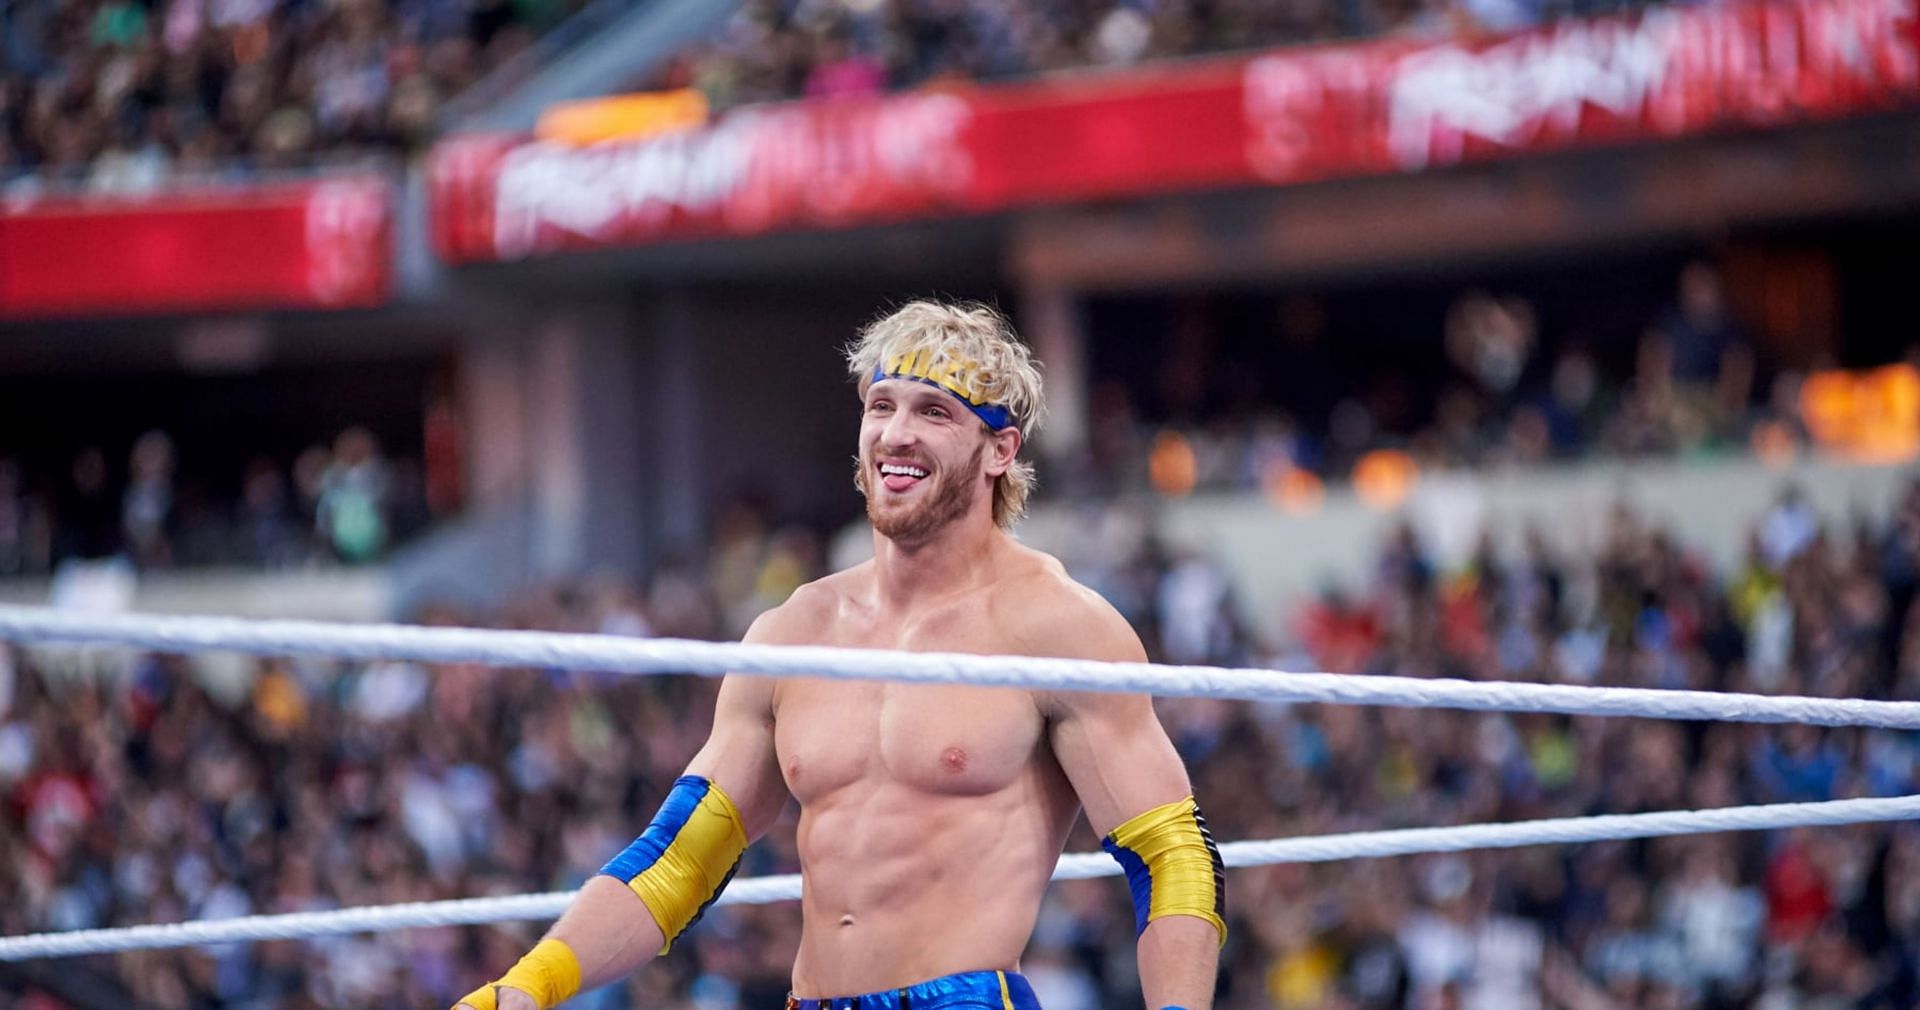 Will Logan Paul meet his match at SummerSlam?